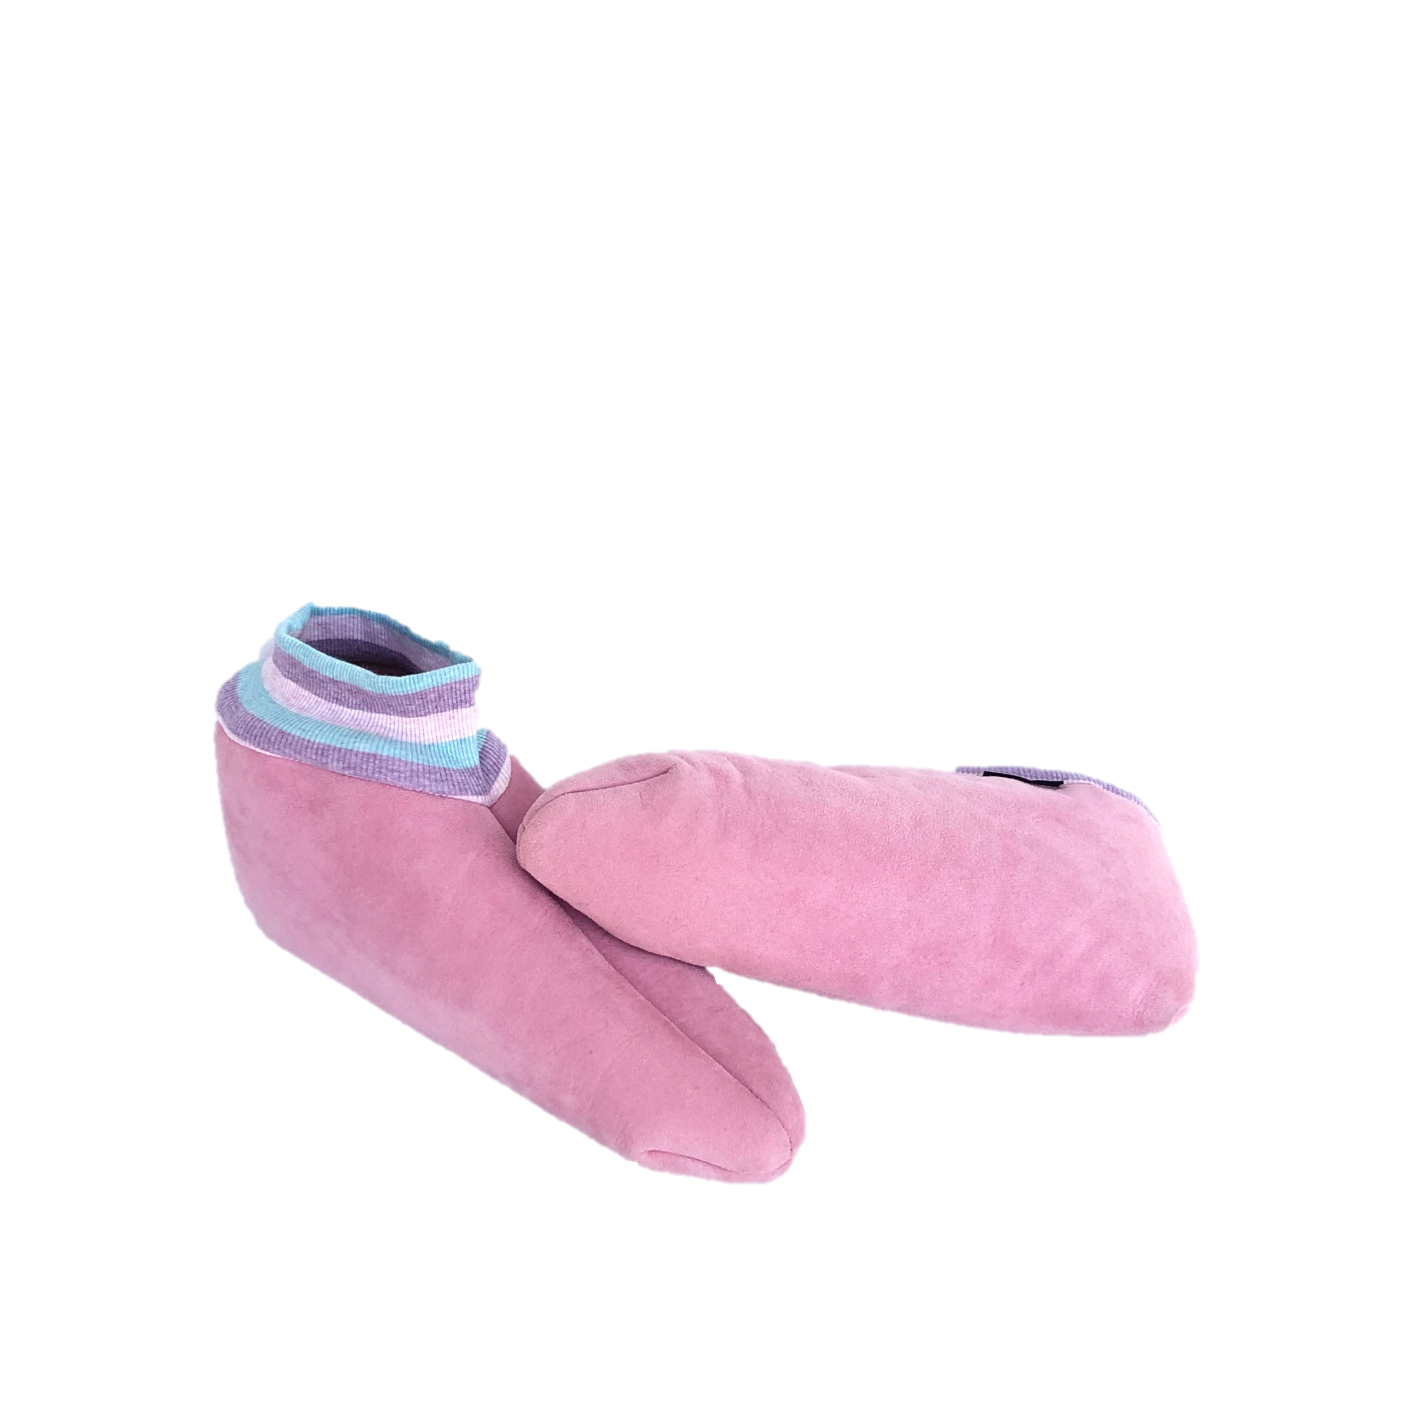 Pink slipper/sock style booties